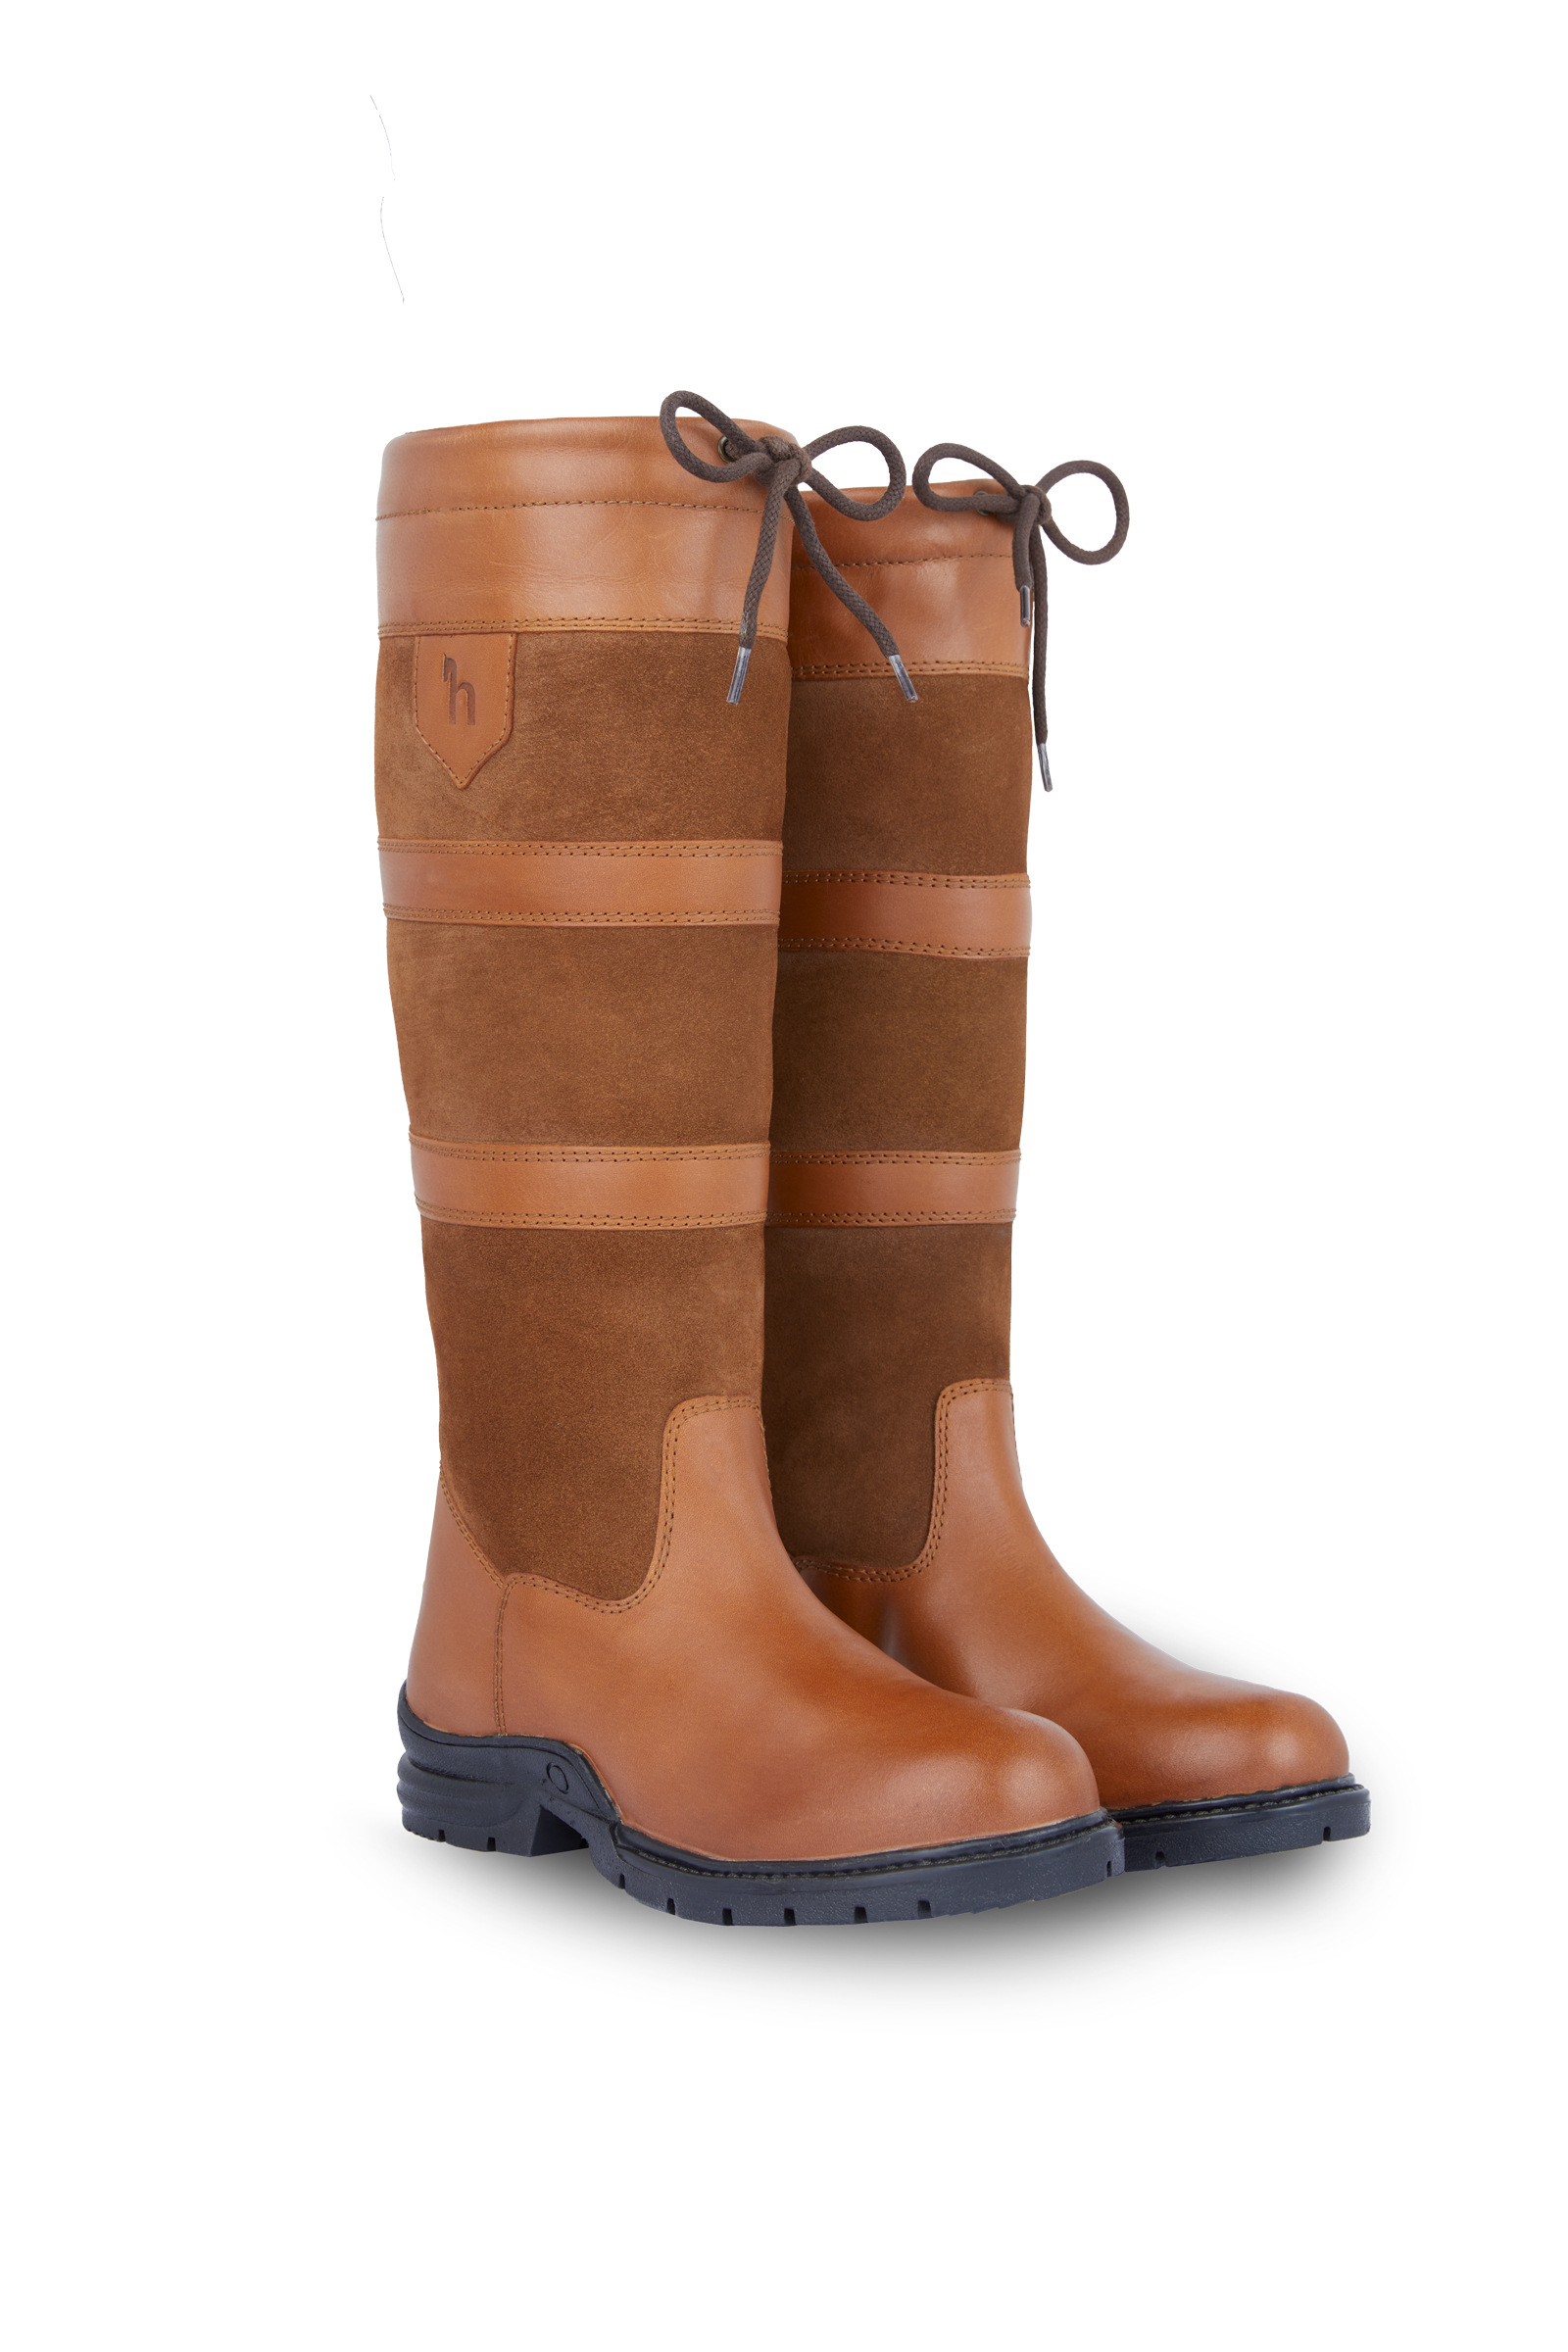 HORZE Rovigo Tall Country Boots - Brown - 6